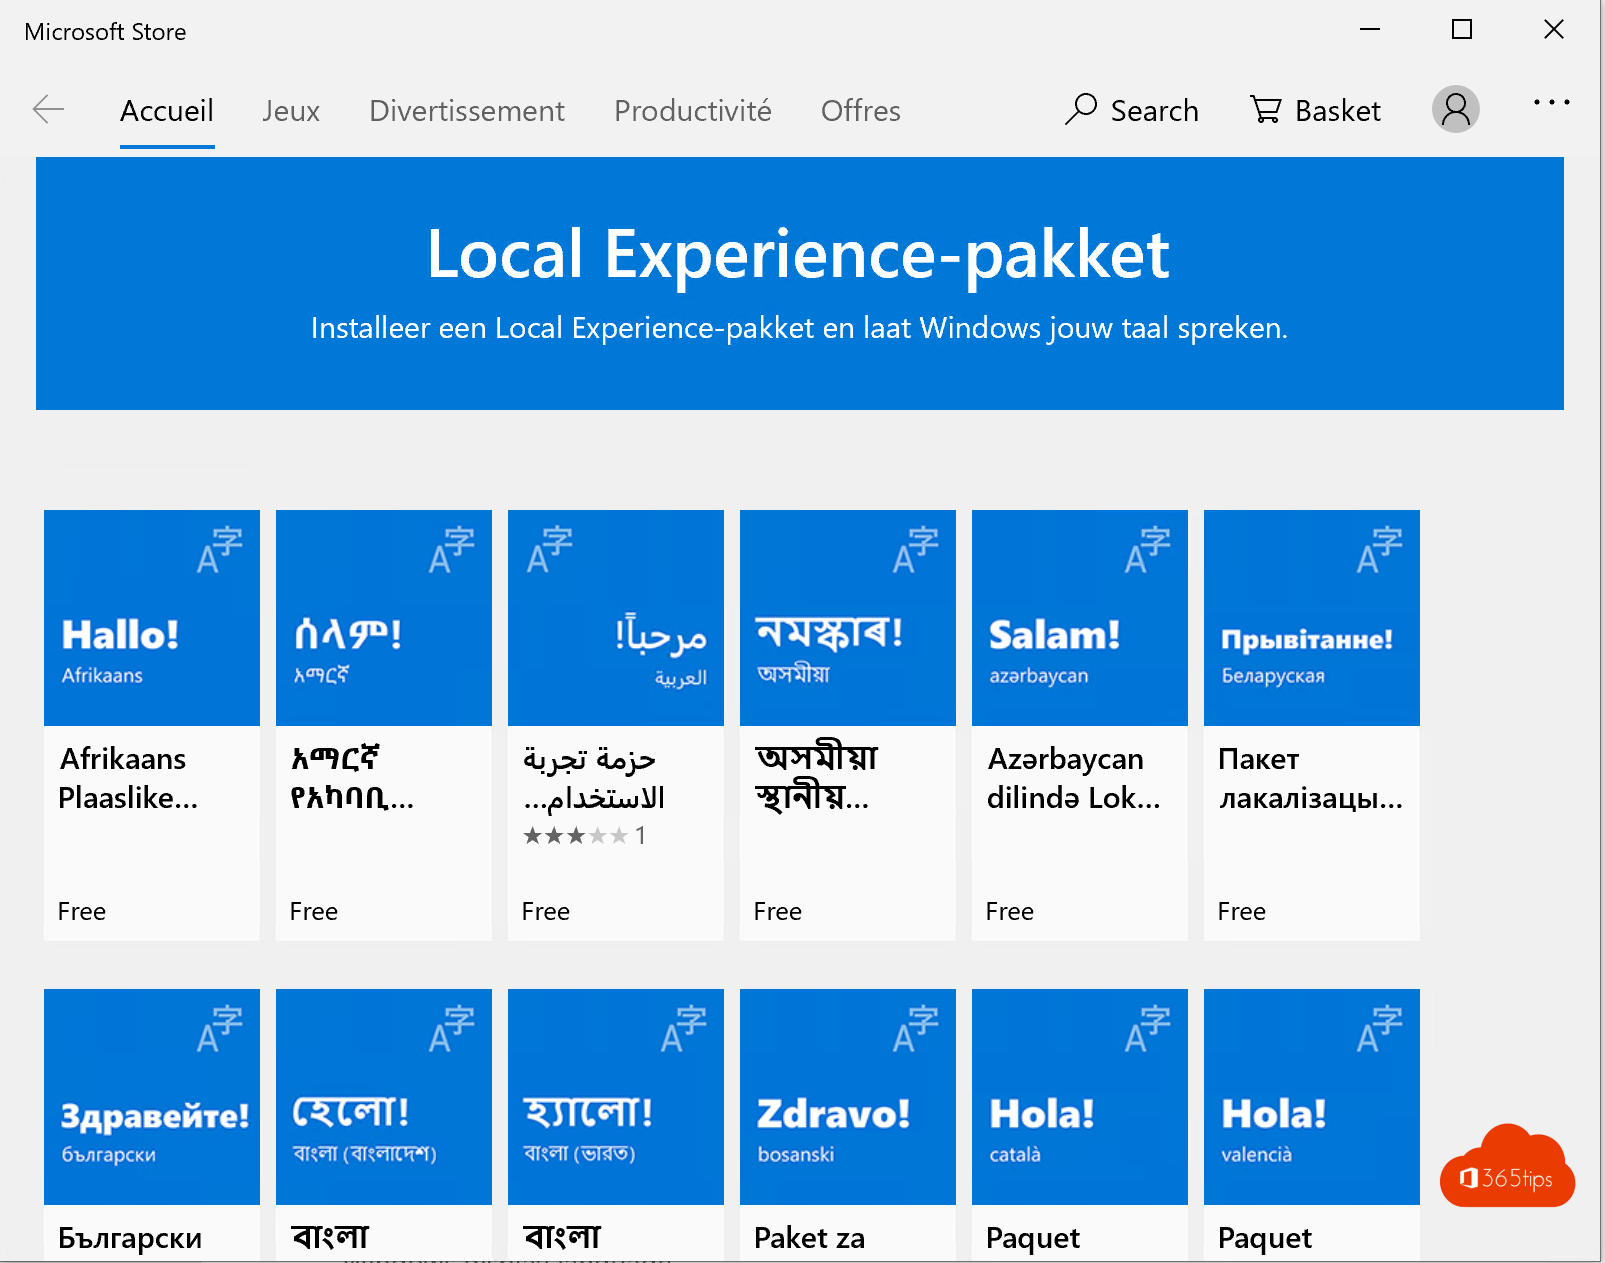 How to change the language in Windows 10 to Belgium - Dutch